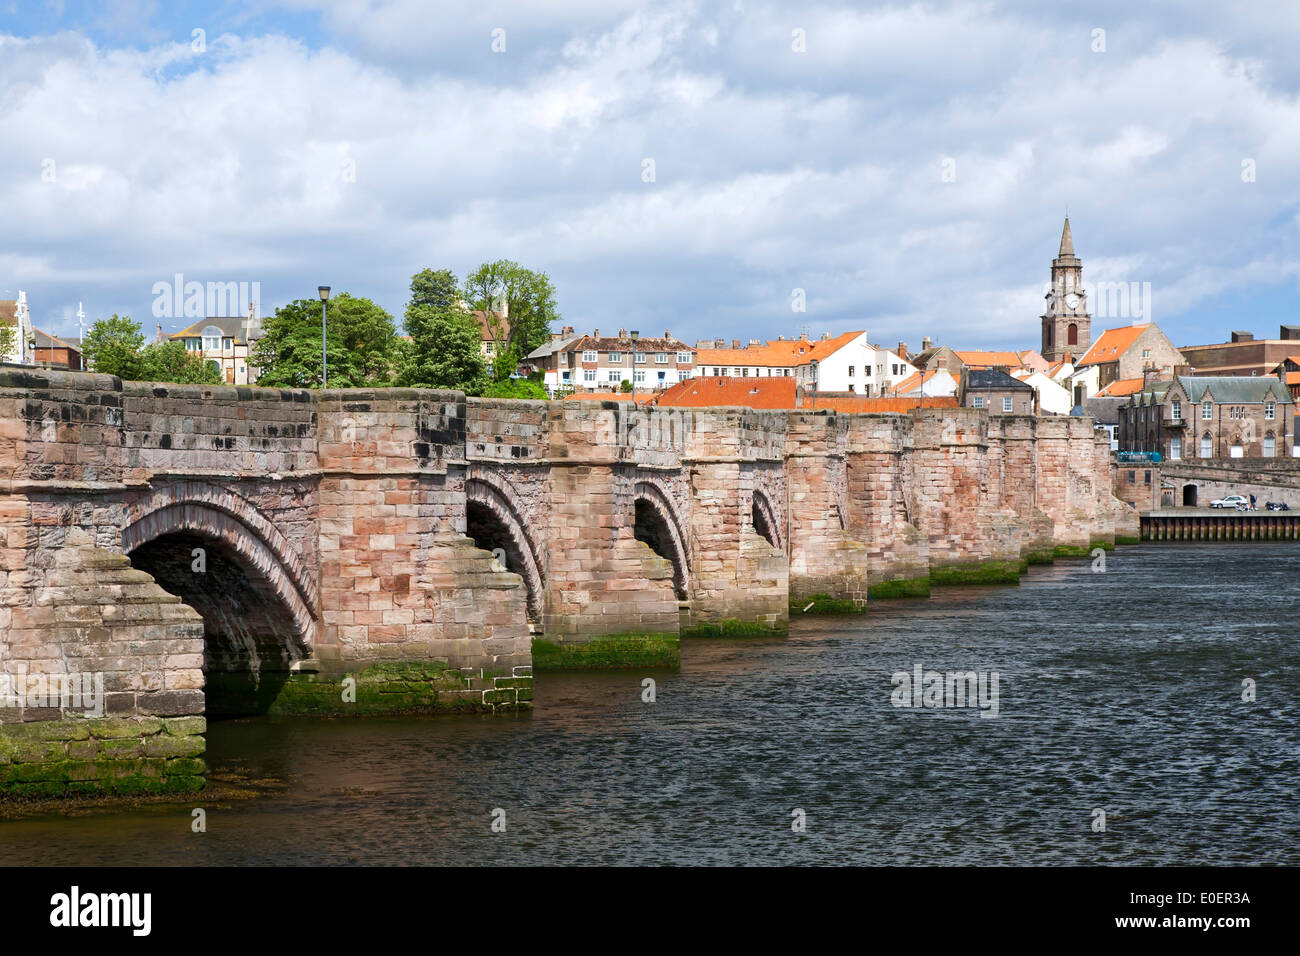 Town, Old Bridge and River Tweed, Berwick-upon-Tweed, England, United Kingdom Stock Photo